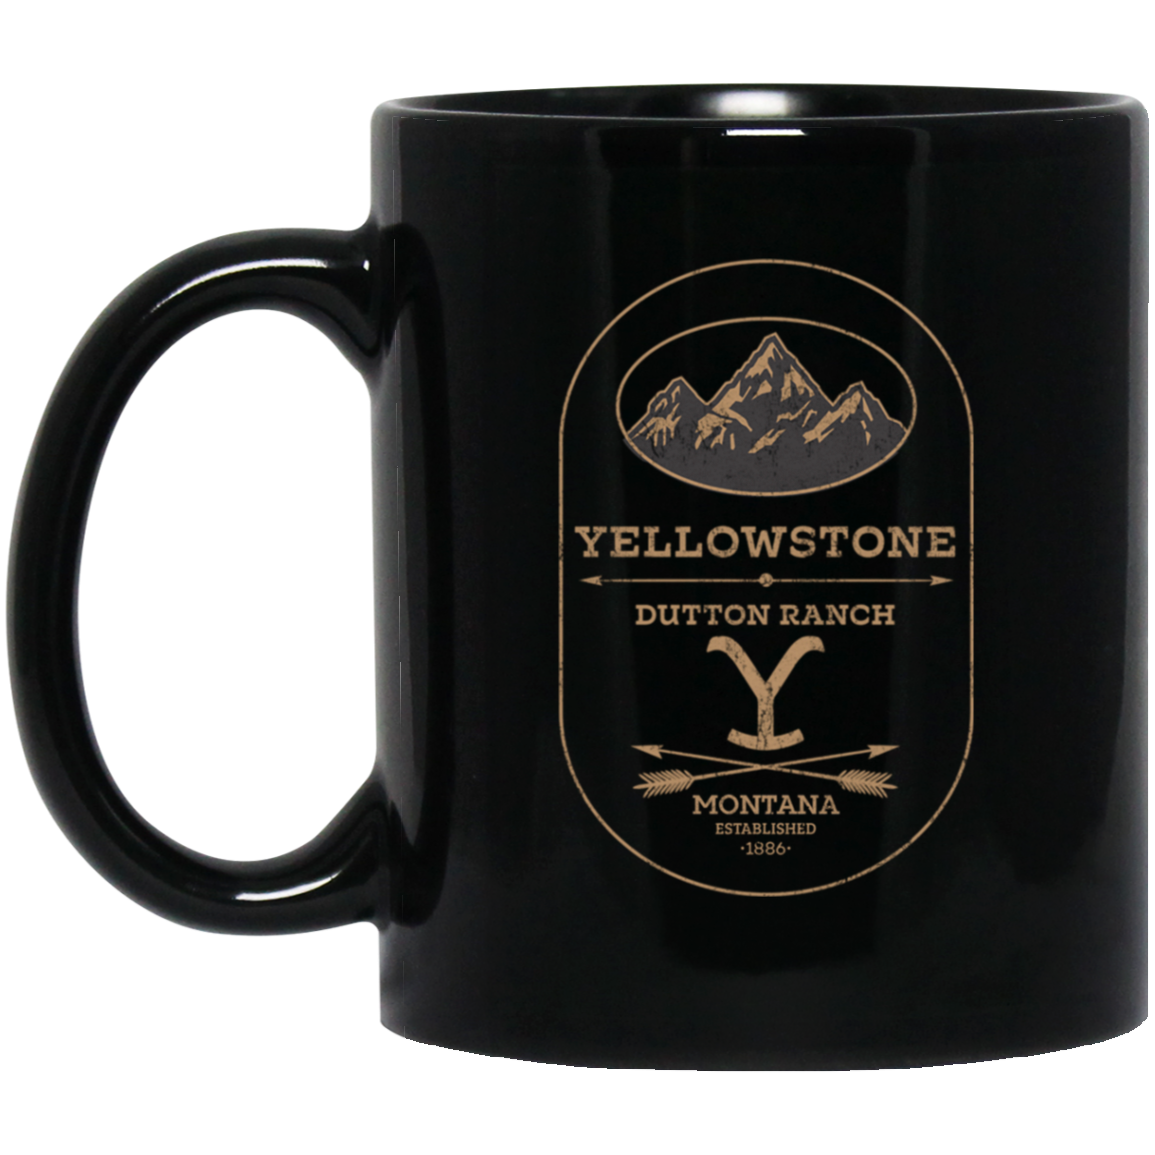 Yellowstone Dutton Ranch Label Gm Black Mug